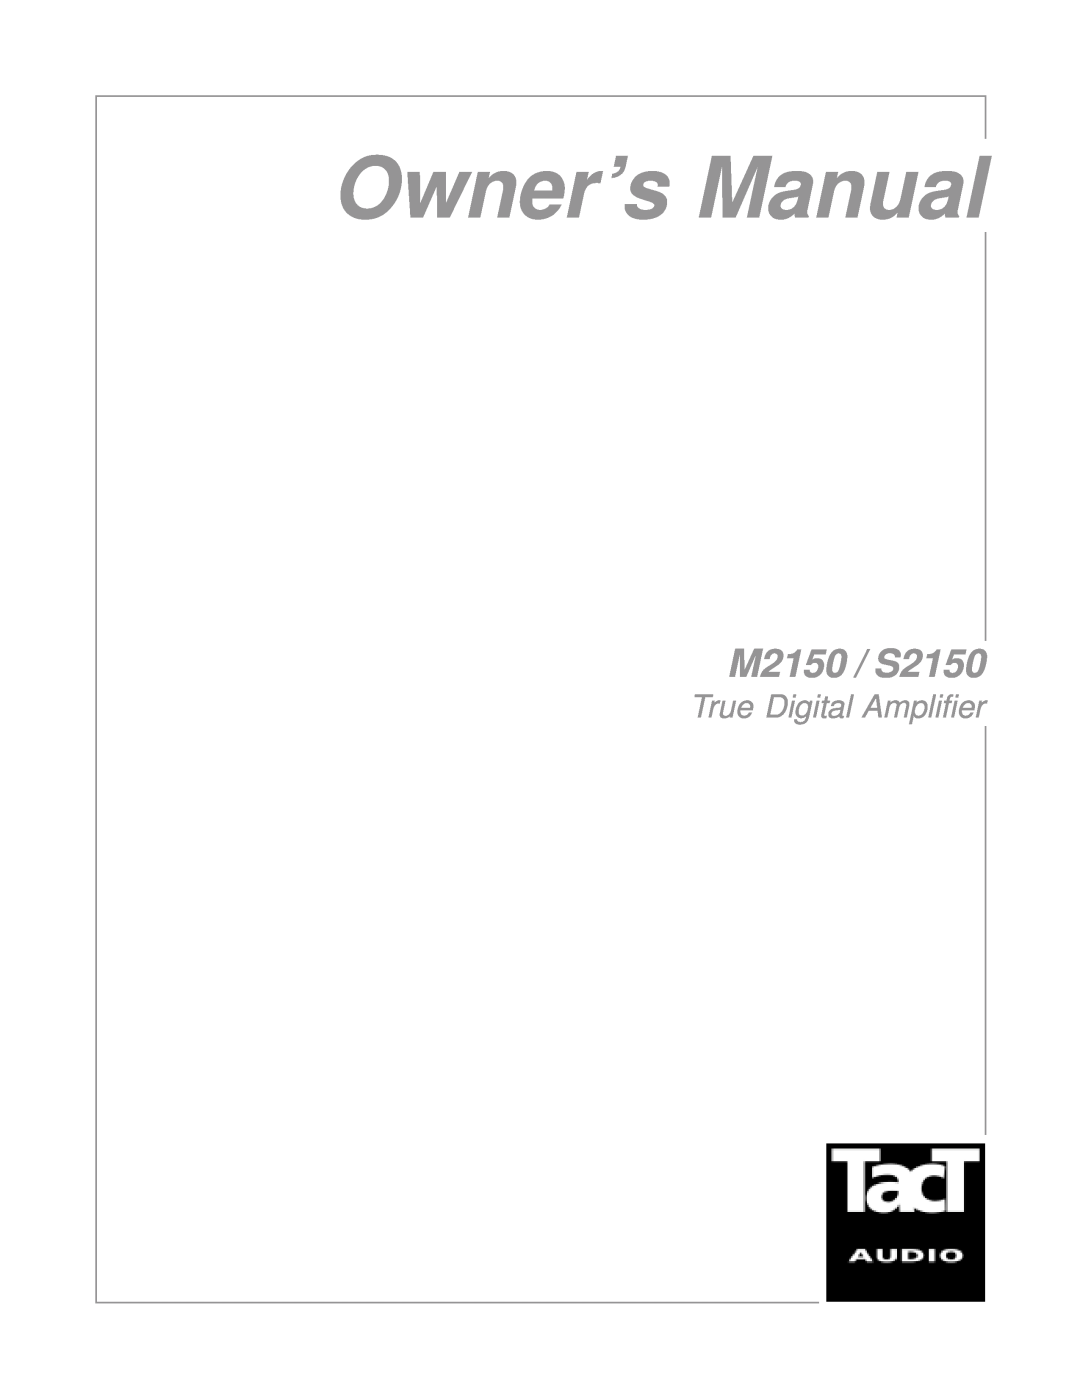 TacT Audio owner manual M2150 / S2150, True Digital Amplifier 